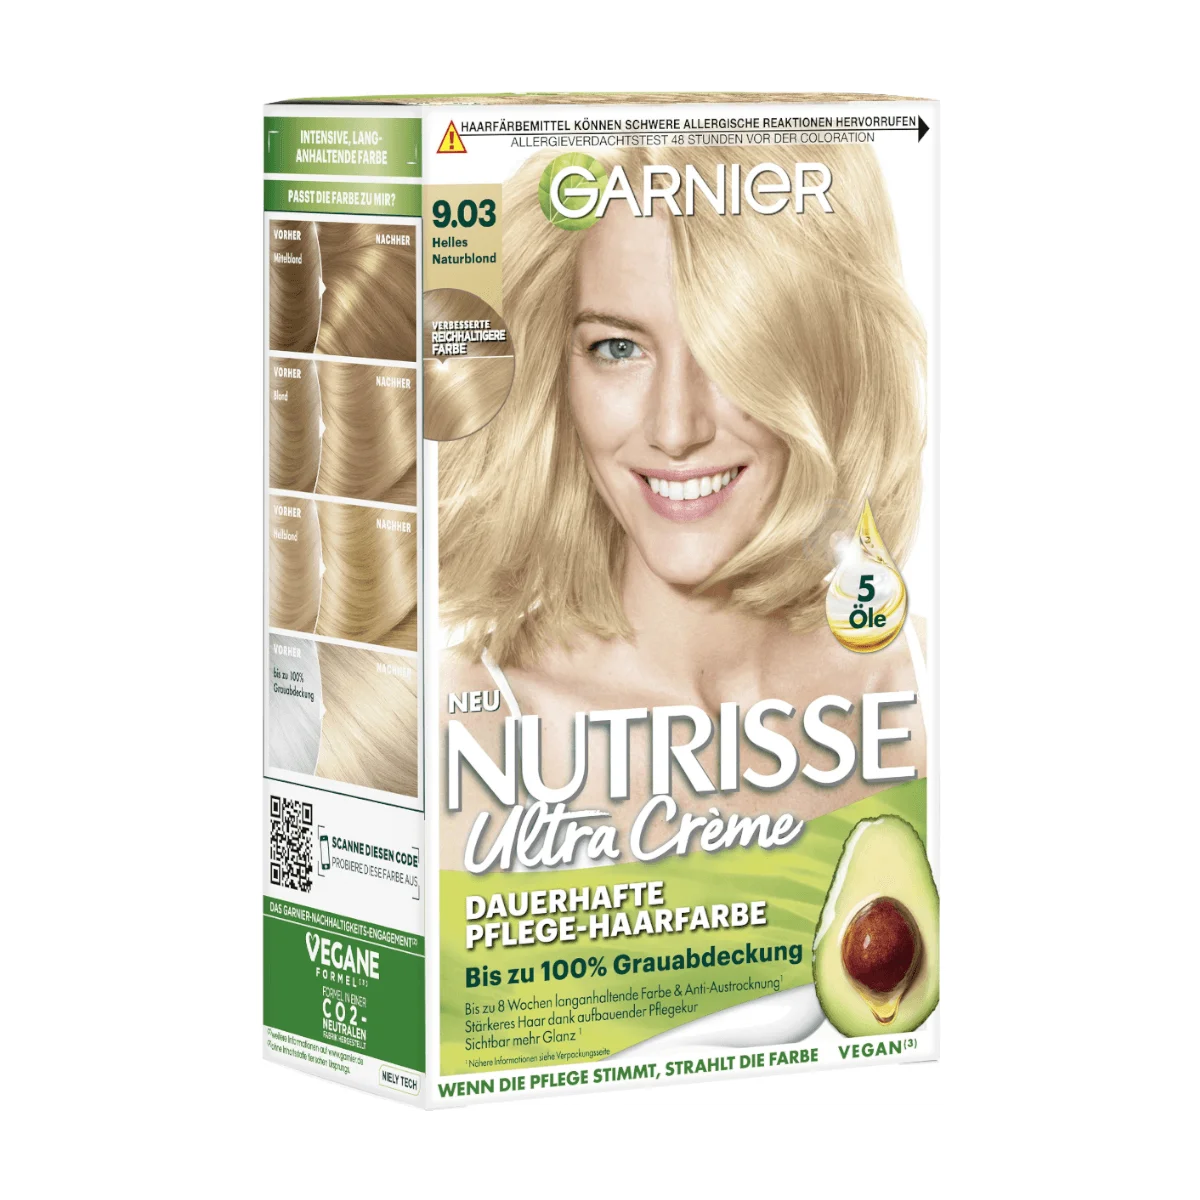 Garnier Nutrisse Ultra Creme Haarfarbe 9.03 Helles Naturblond, 1 Stk